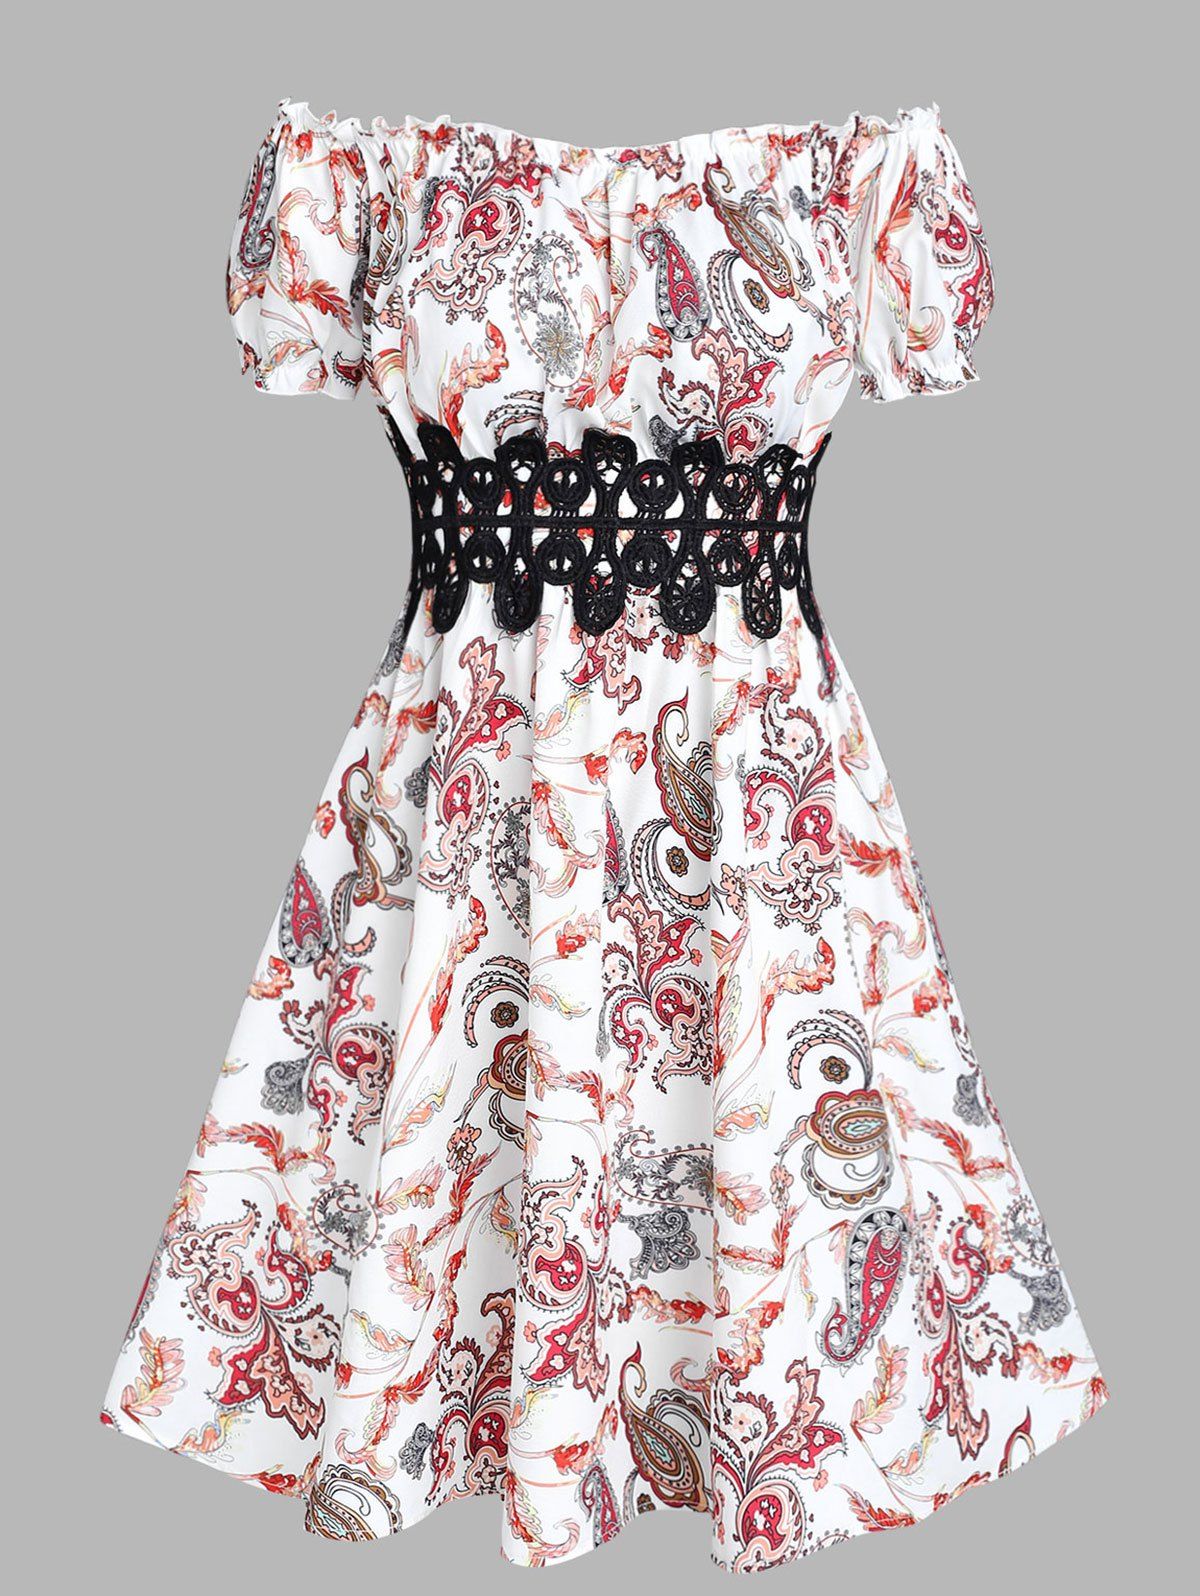 Bohemian Off Shoulder Paisley Print Applique Insert Frilled Dress - multicolor XL